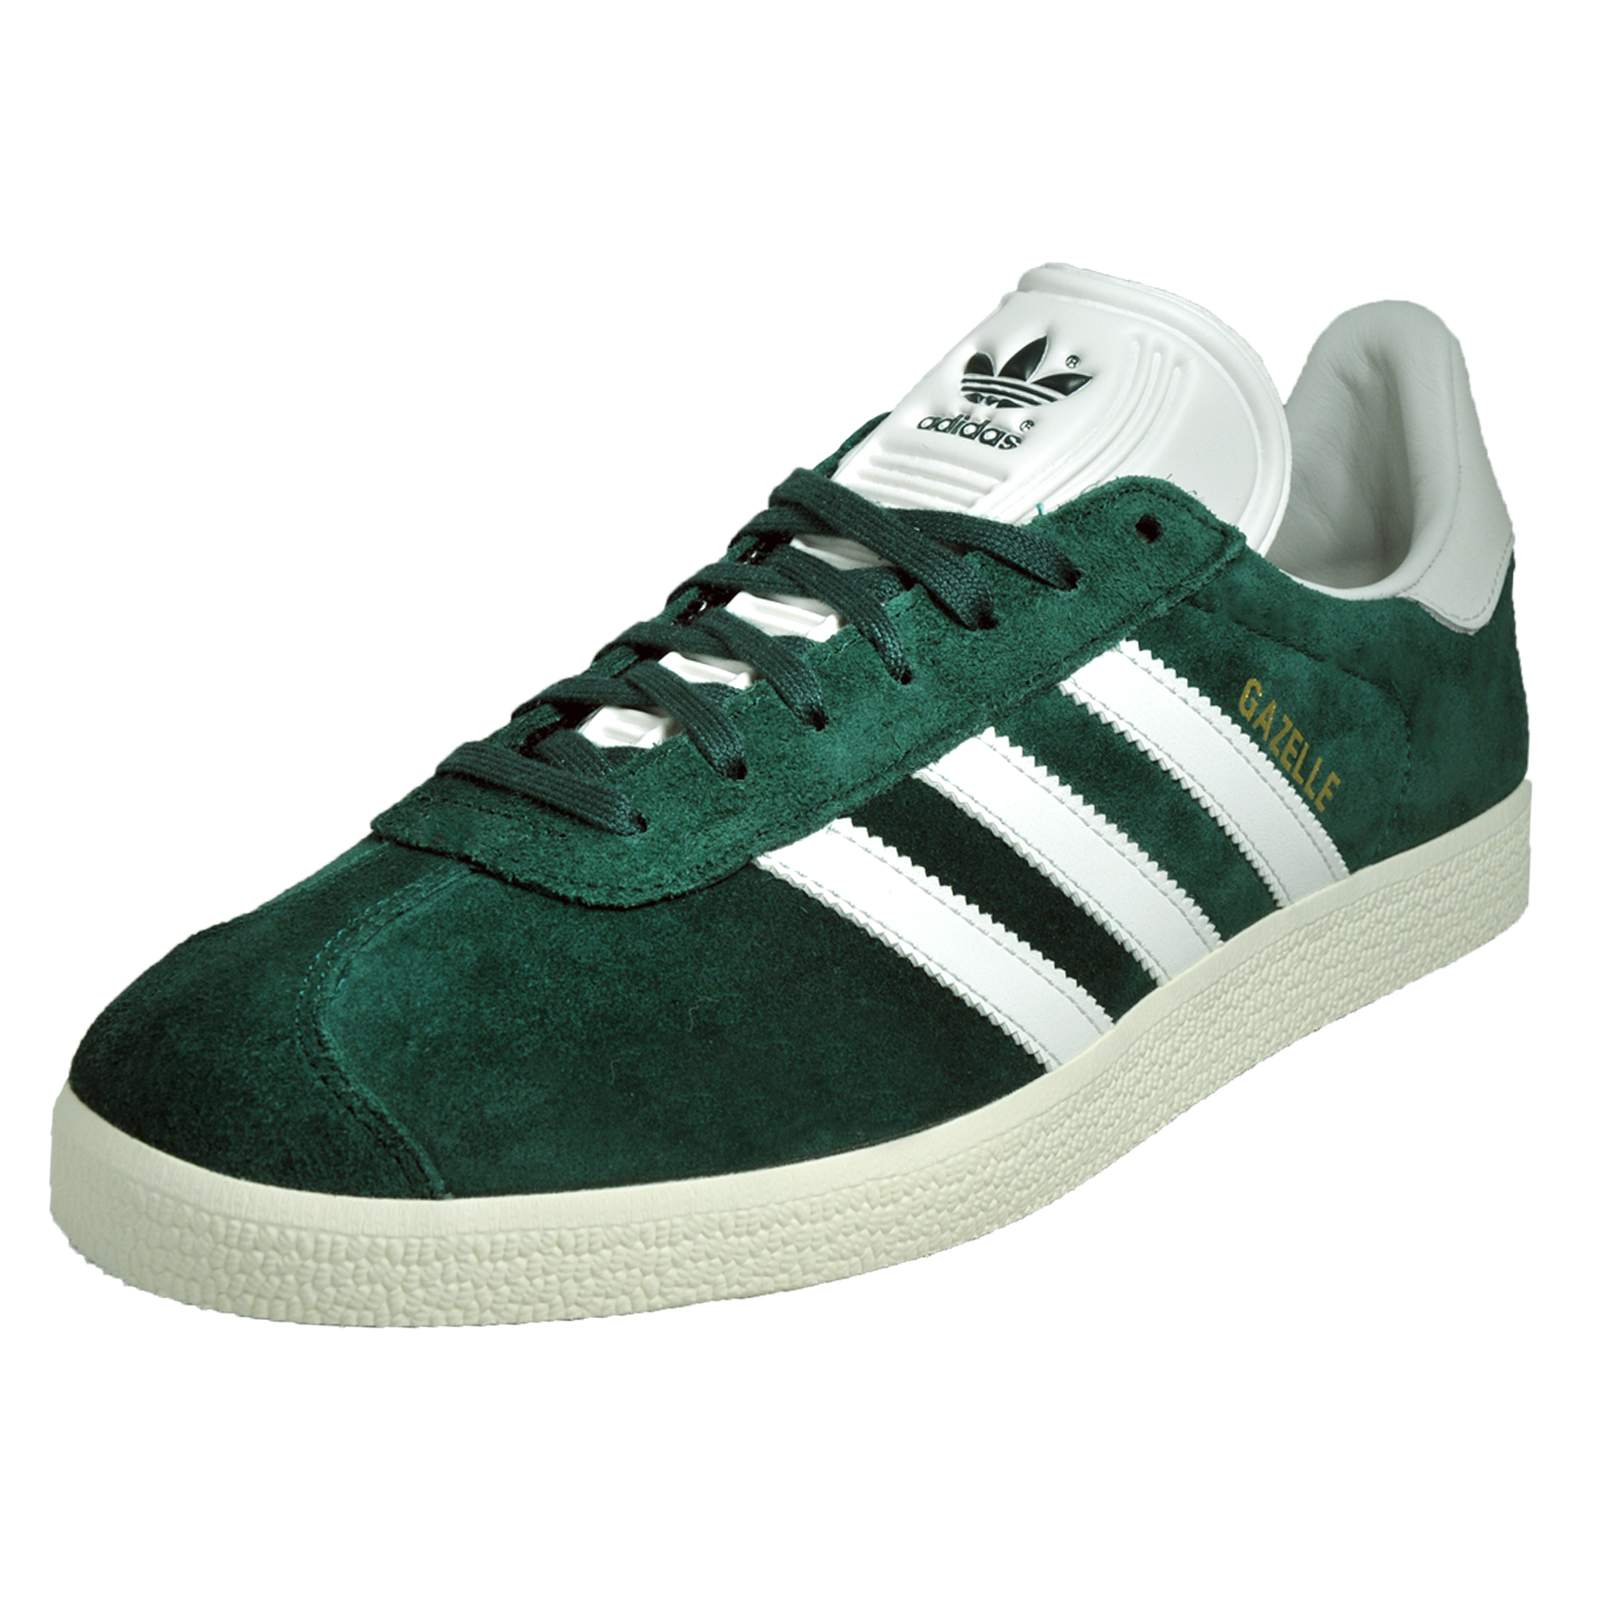 Adidas Originals Gazelle Mens Classic Casual Retro Trainers Green | eBay